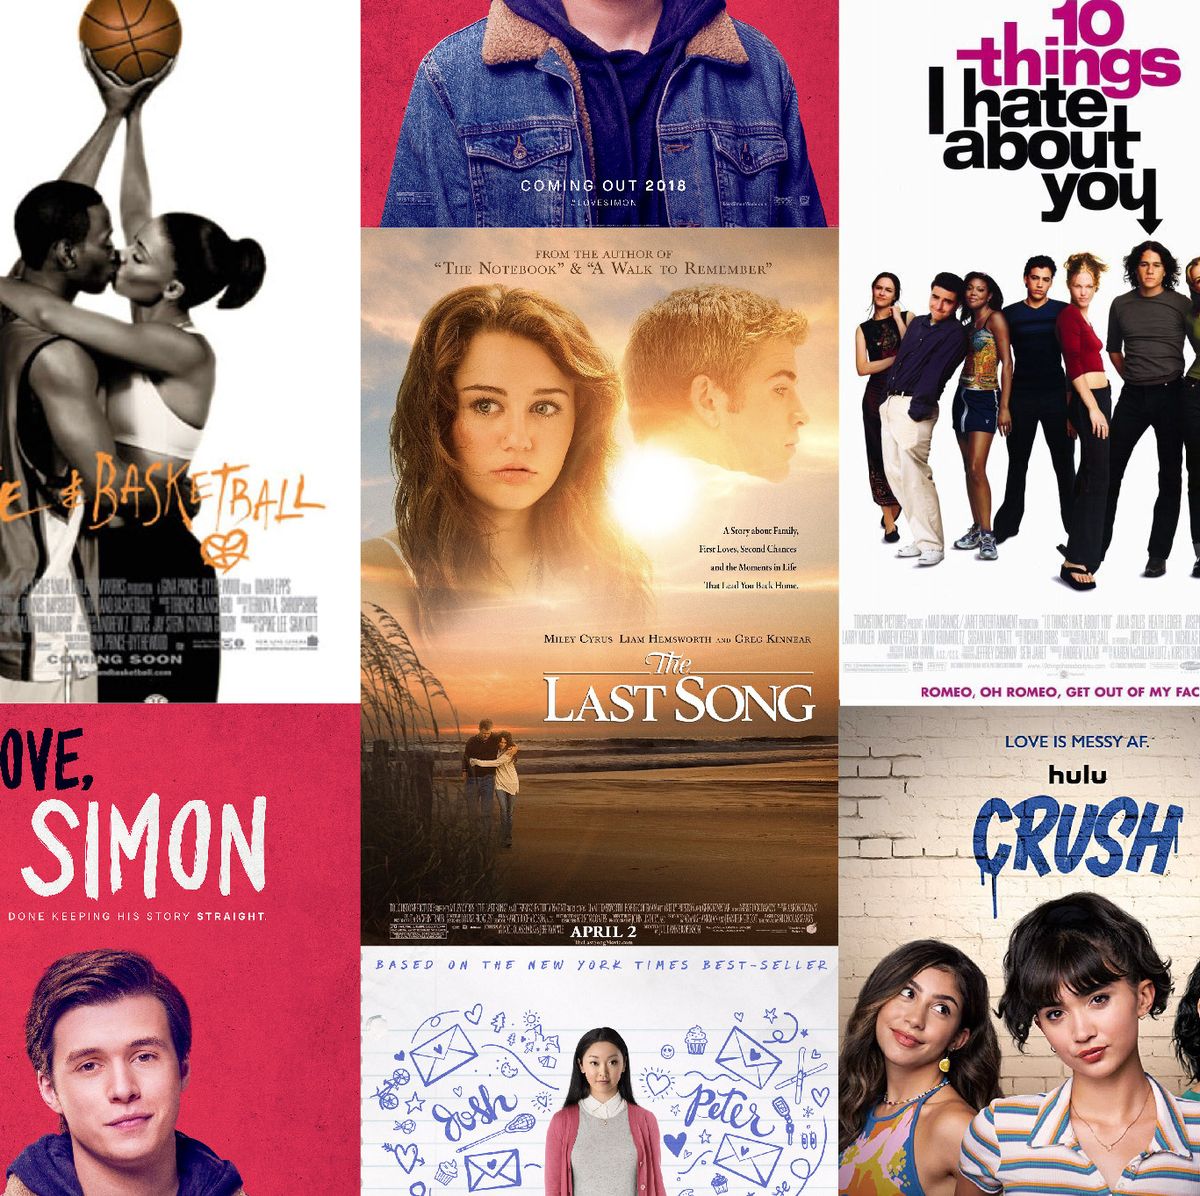 10 Of The Best Romance Movies on Netflix - 2022 